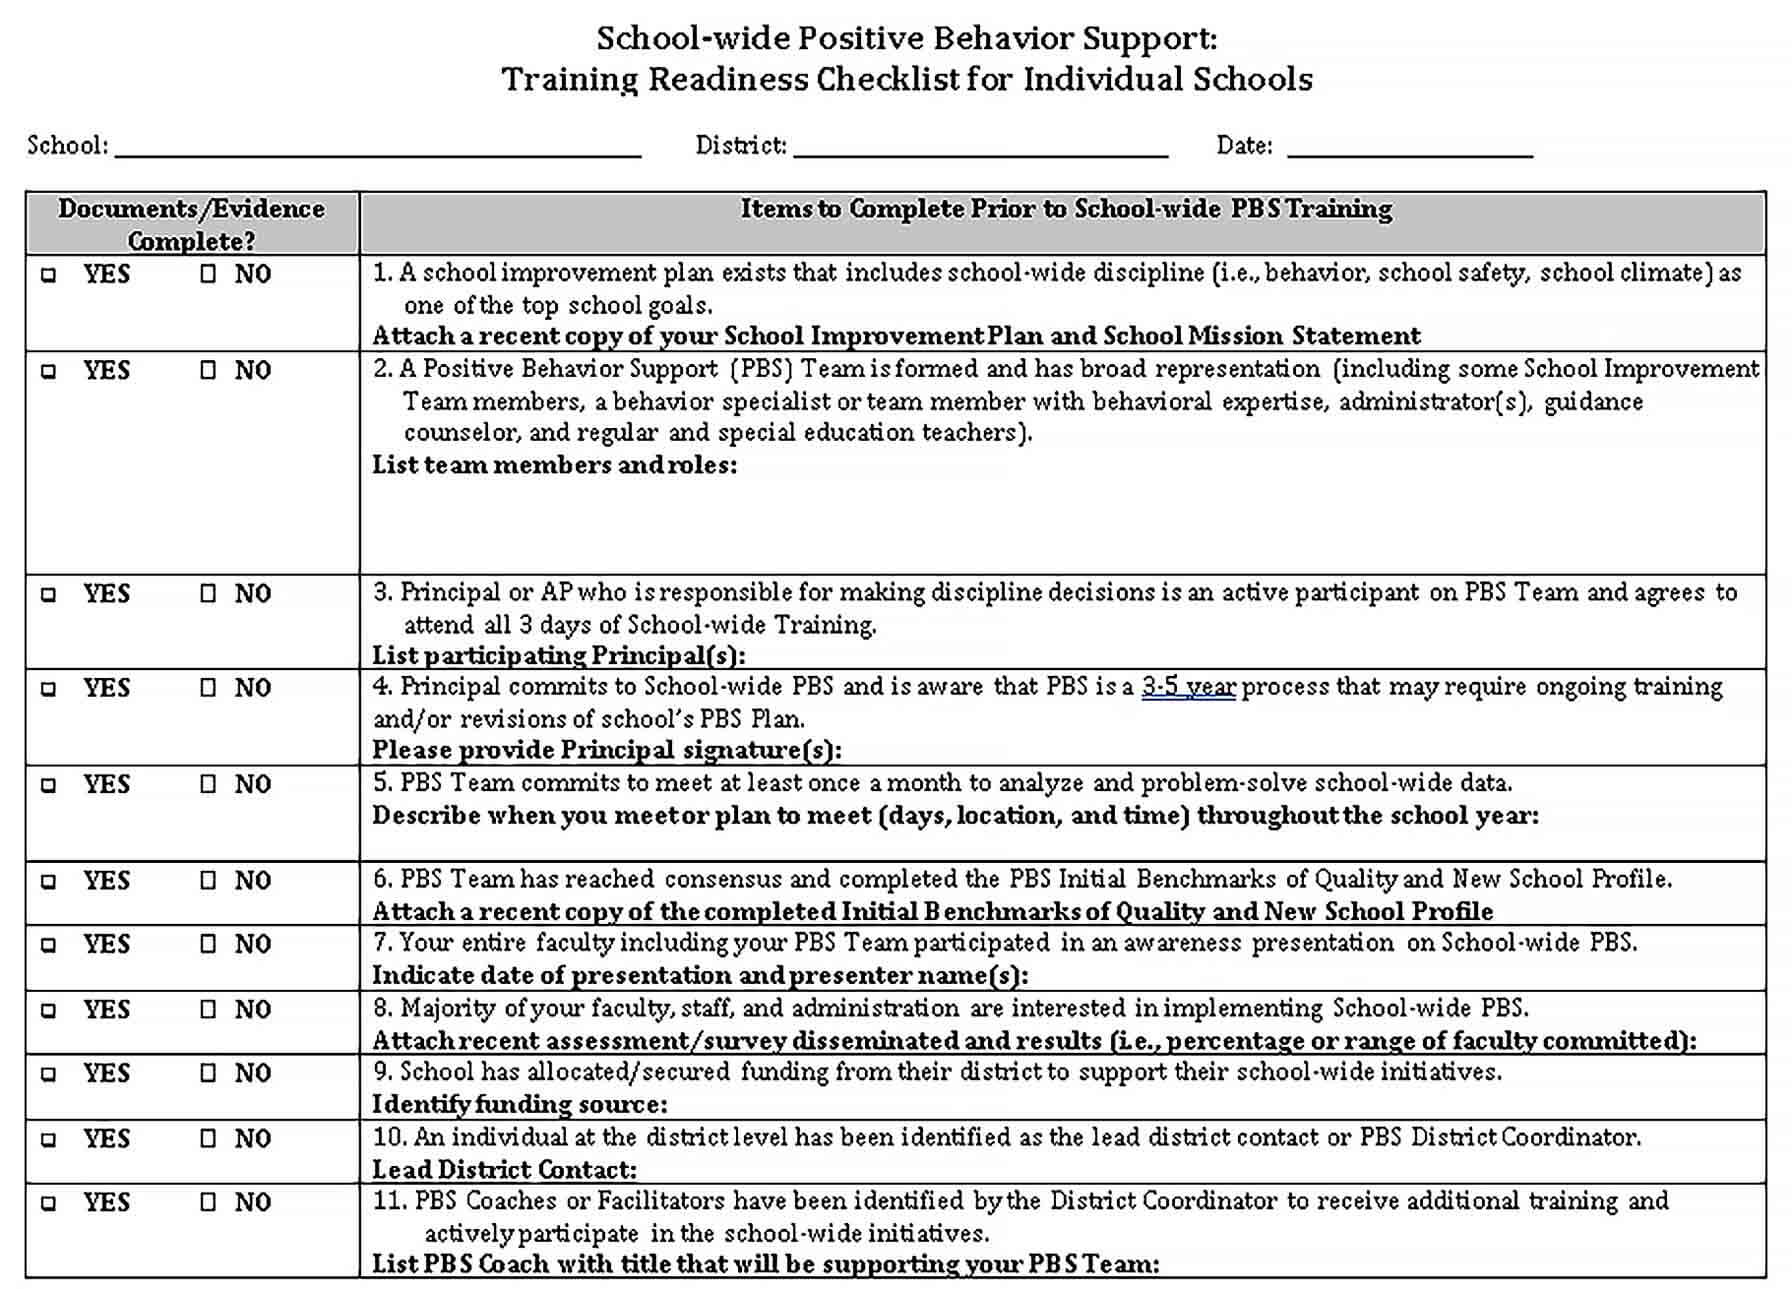 Sample School Readiness Checklist 5.10.05